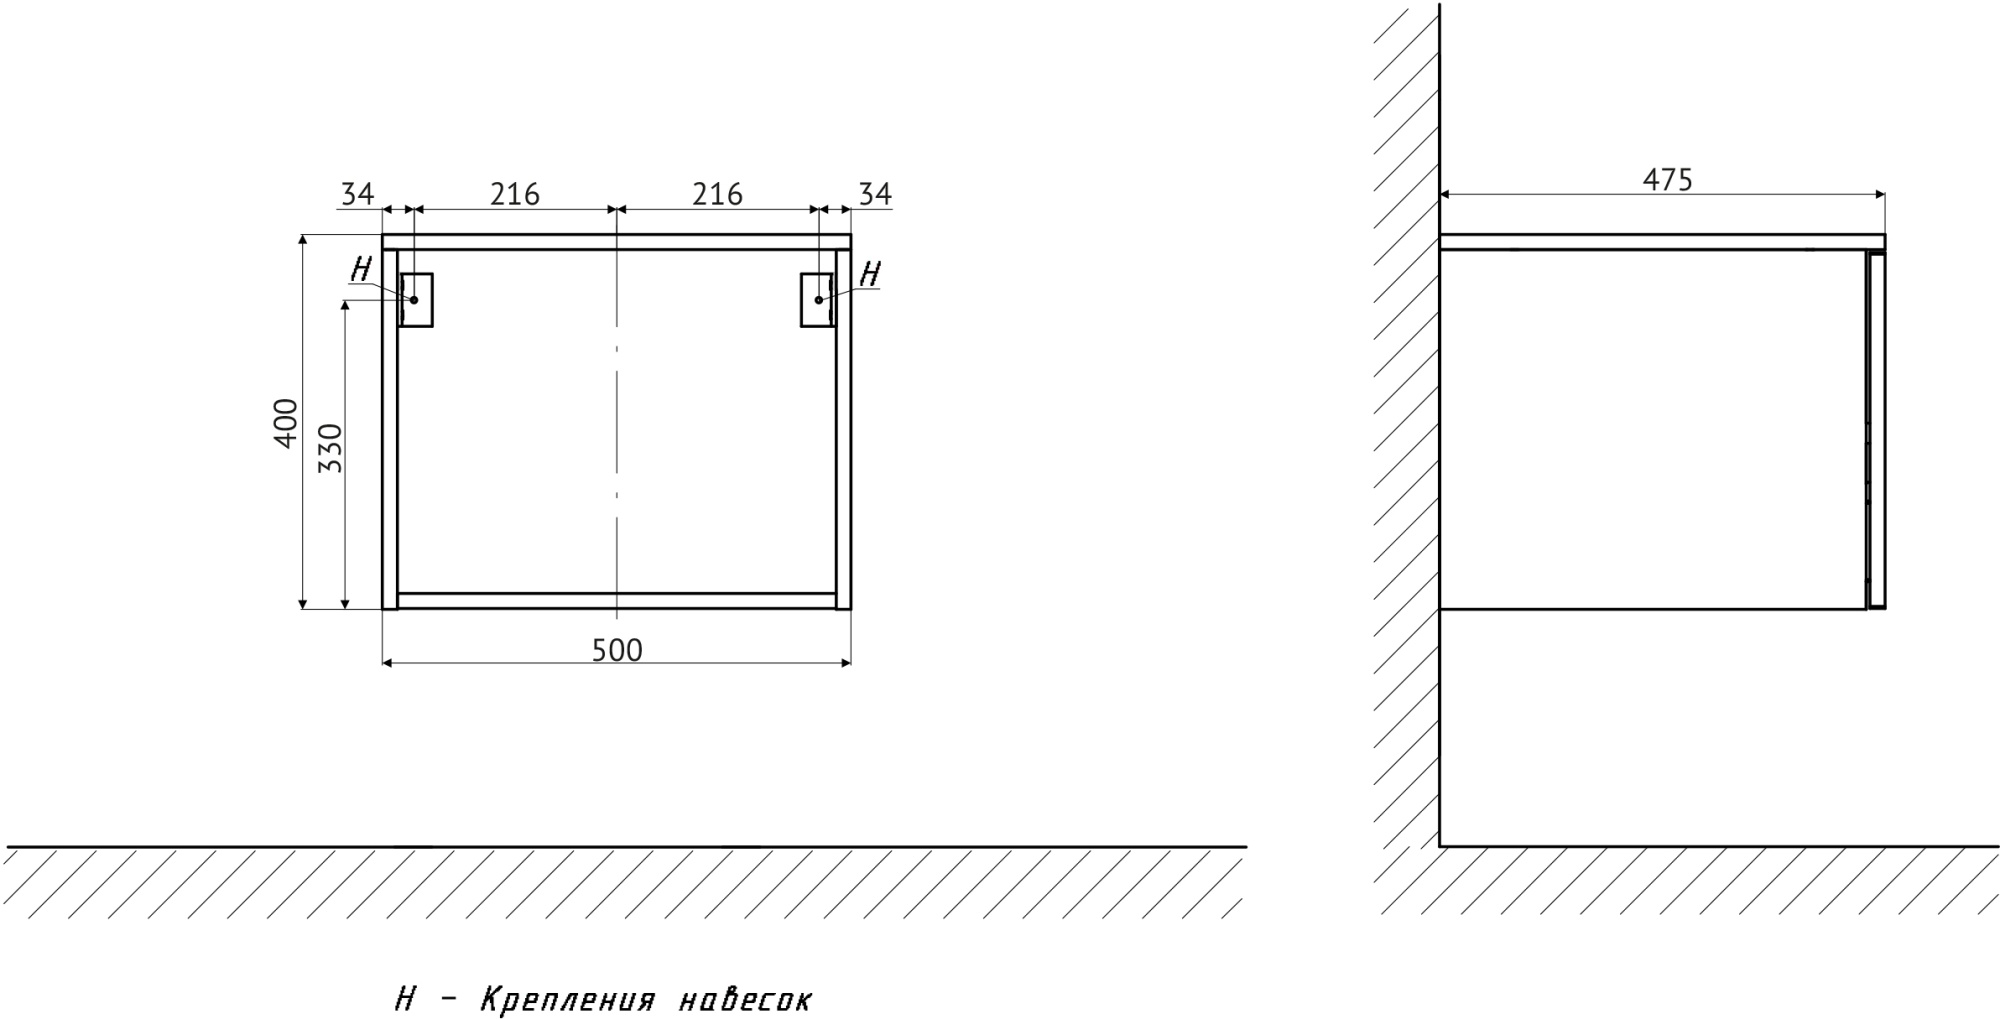  Комплект мебели STWORKI Ольборг 100 дуб карпентер, без отверстий, 2 тумбы 50